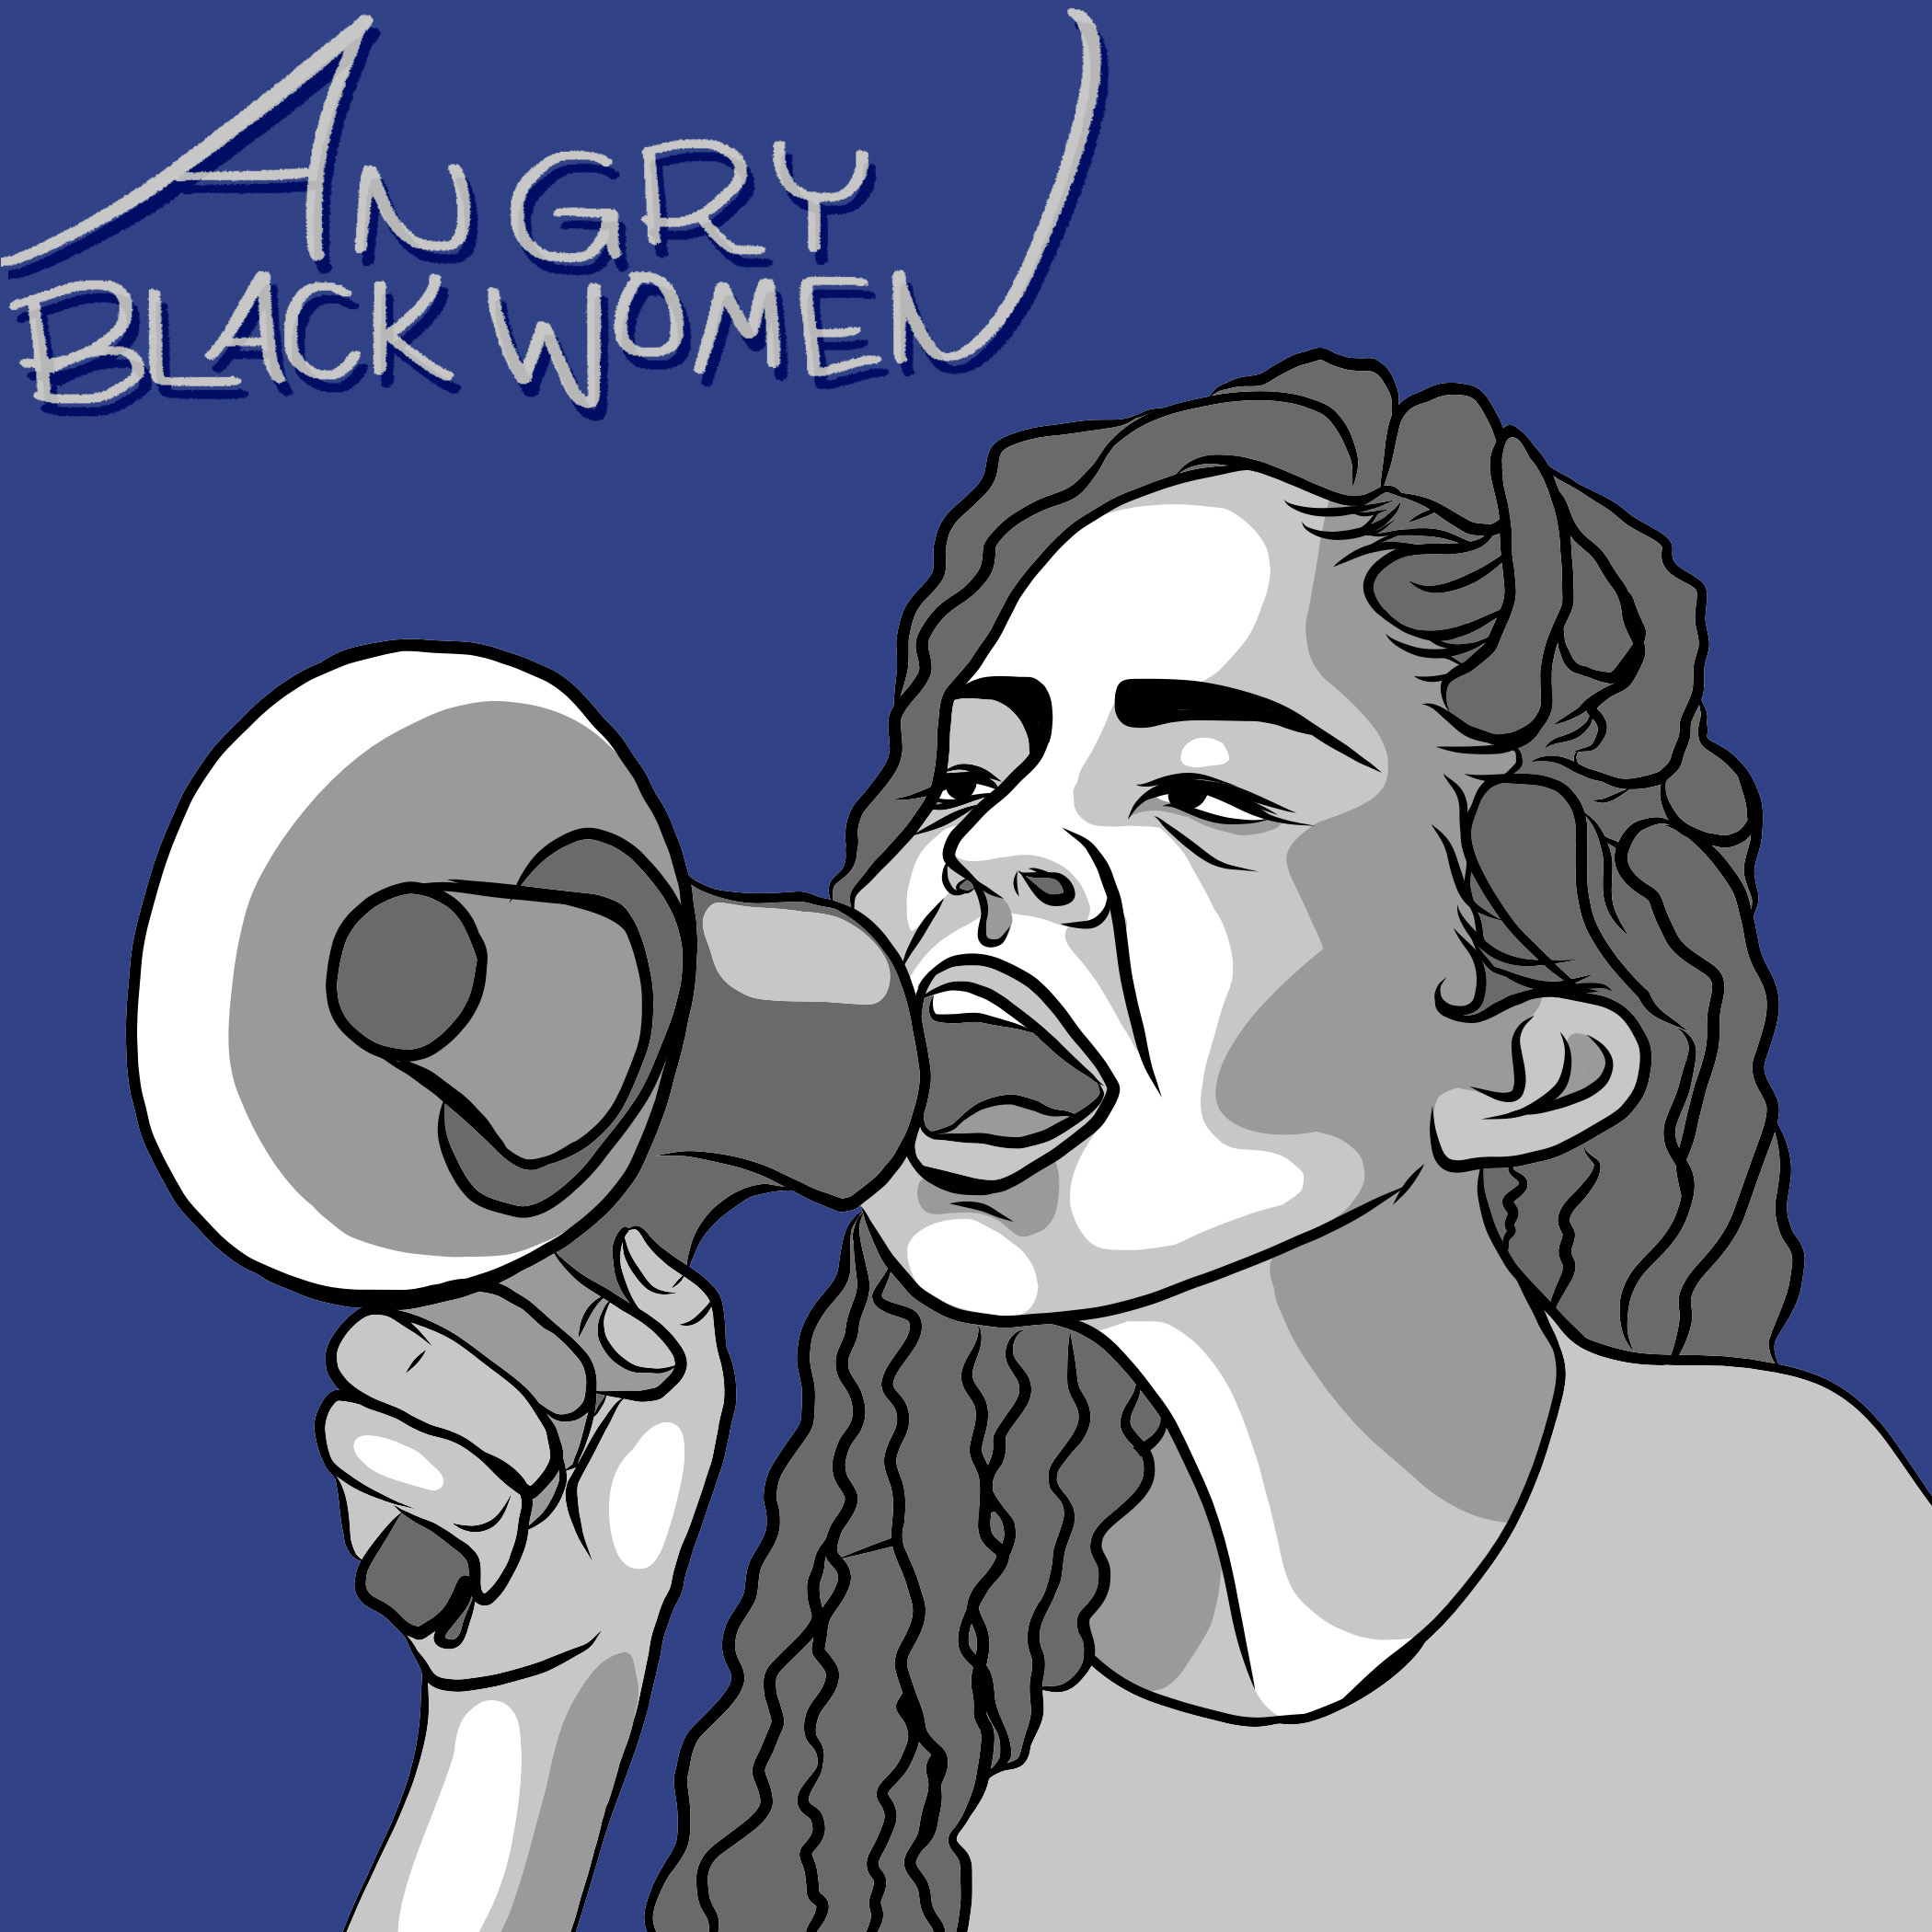 Angry Black Women logo